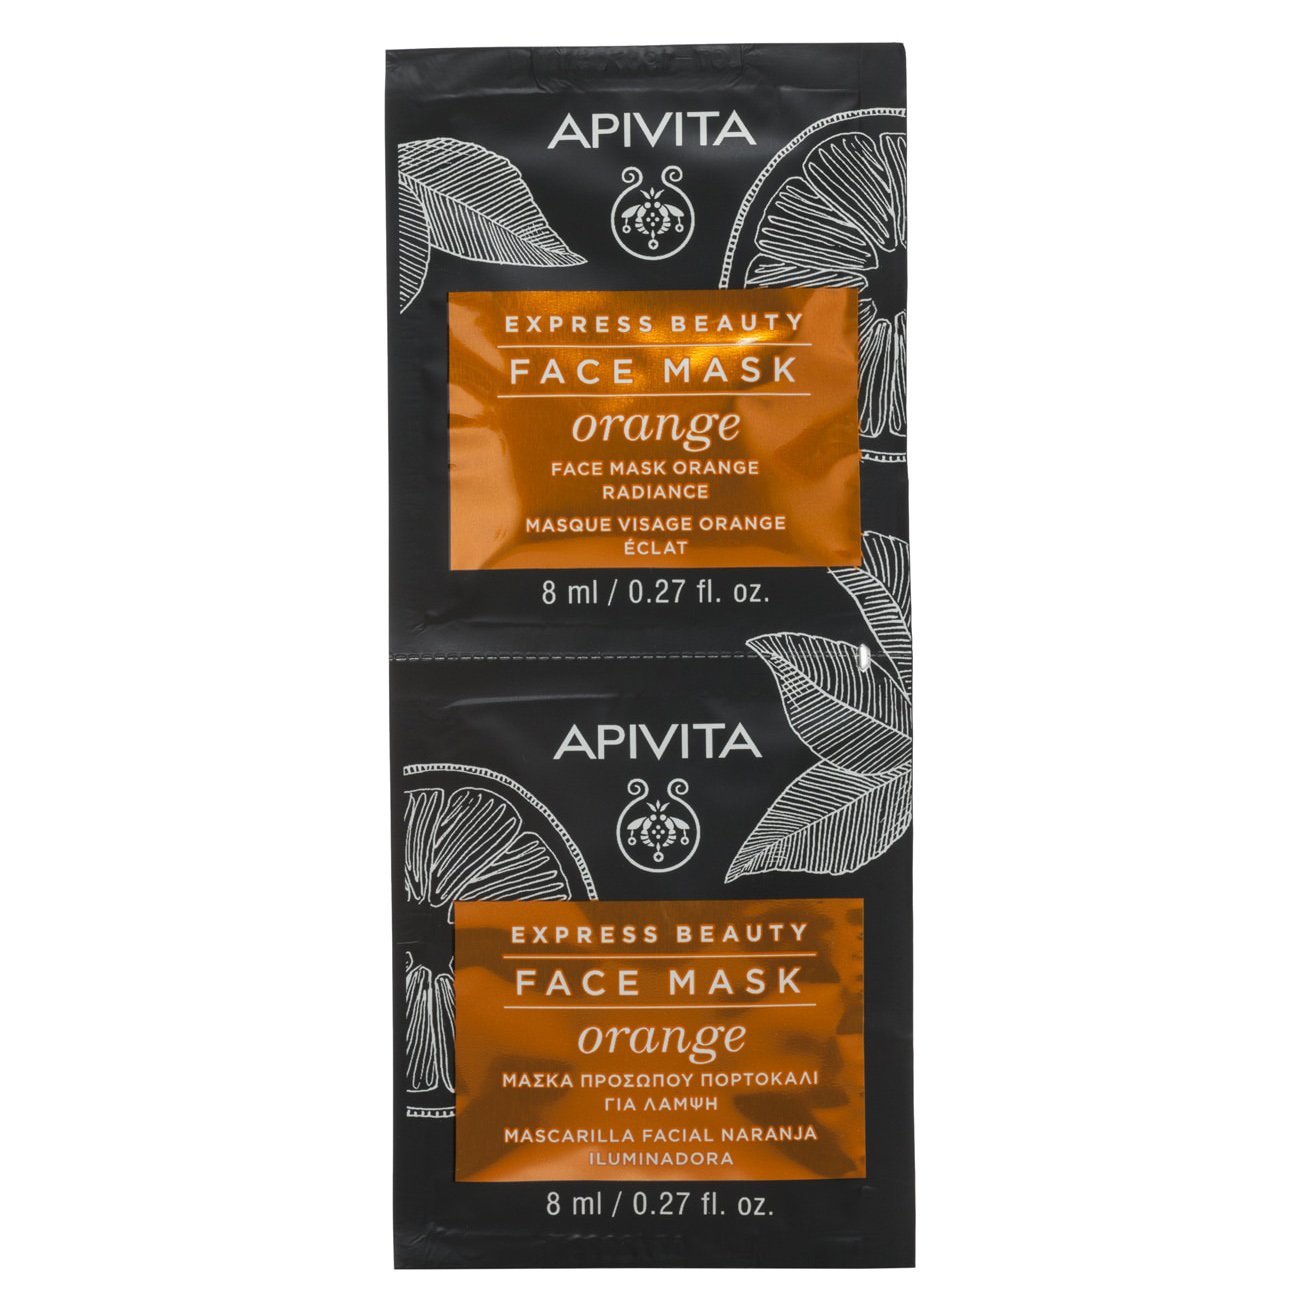 Apivita Express Beauty Face Mask Orange Radiance Μάσκα Προσώπου για Αναζωογόνηση & Λάμψη με Πορτοκάλι 2x8ml